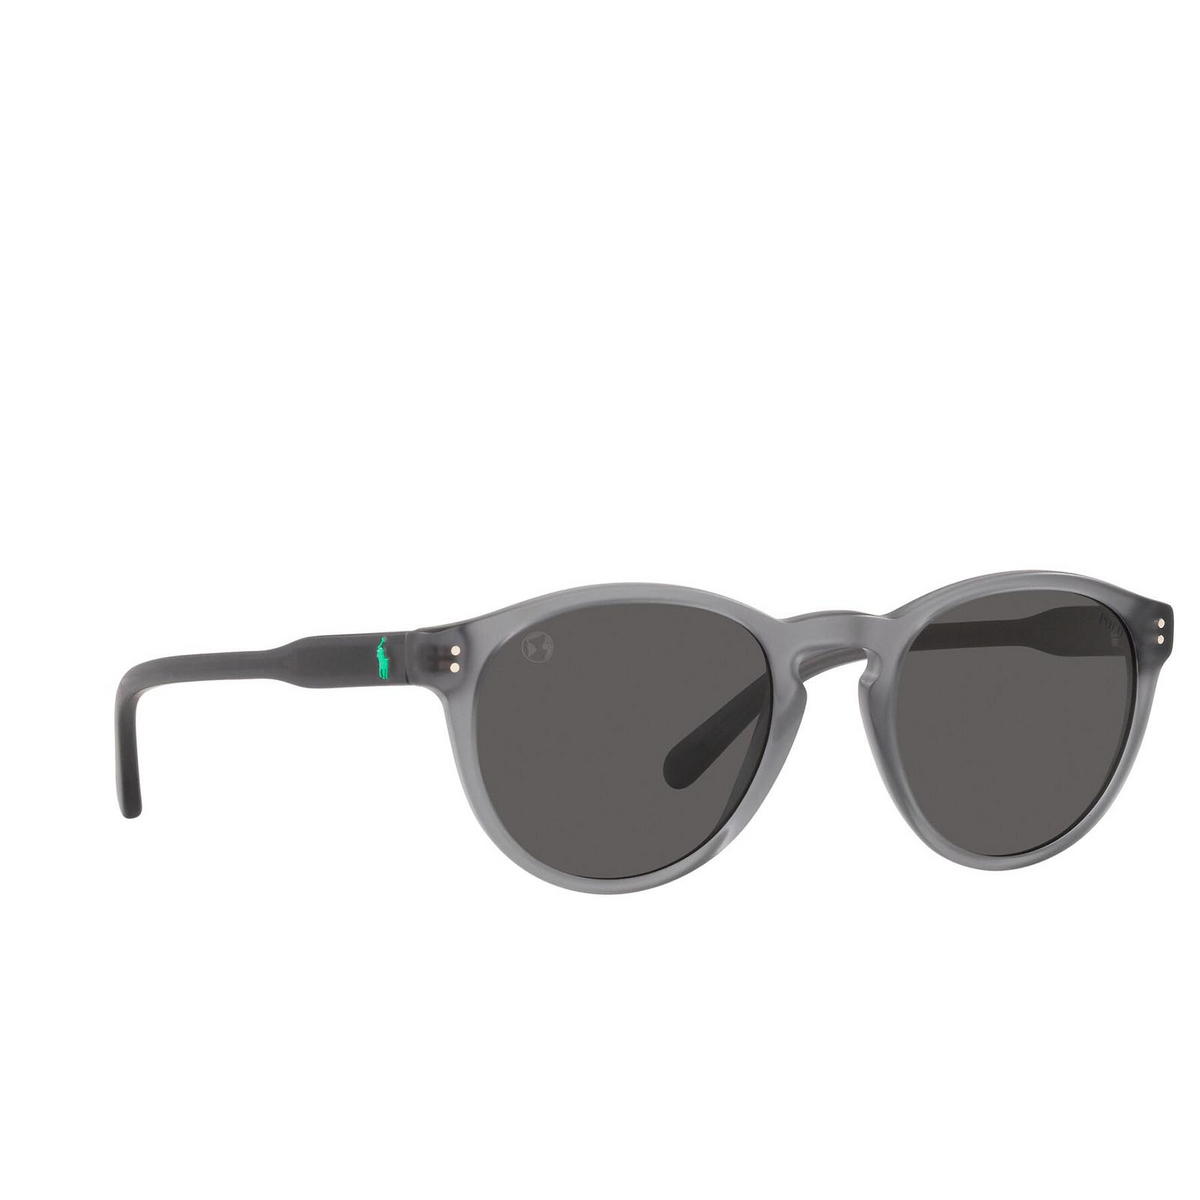 Polo Ralph Lauren® Round Sunglasses: PH4172 color Matte Transparent Dark Grey 595387 - three-quarters view.